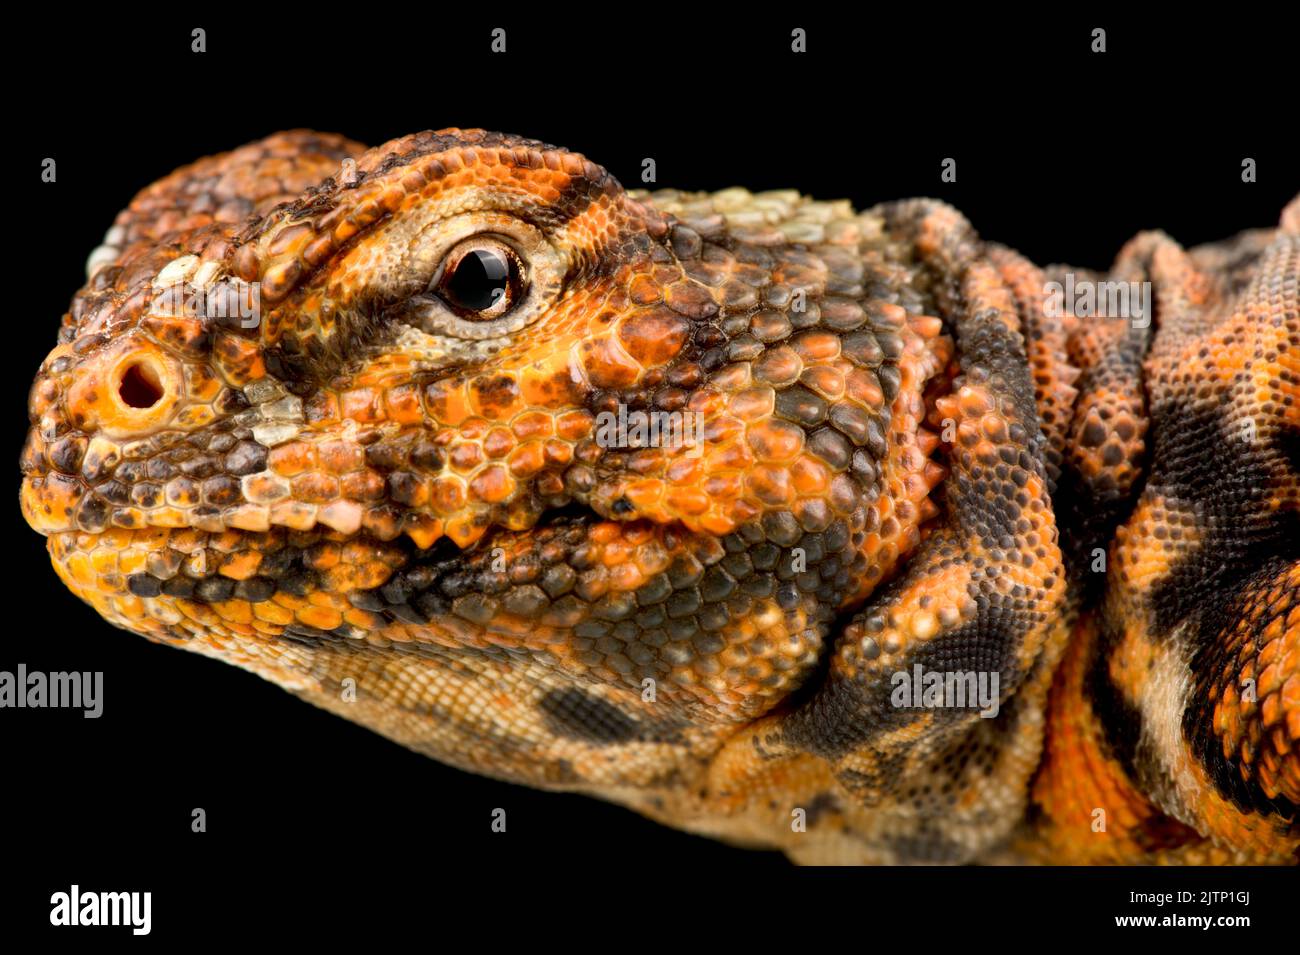 Geyr's Spiny-tailed lizard (Uromastyx geyri) Stock Photo